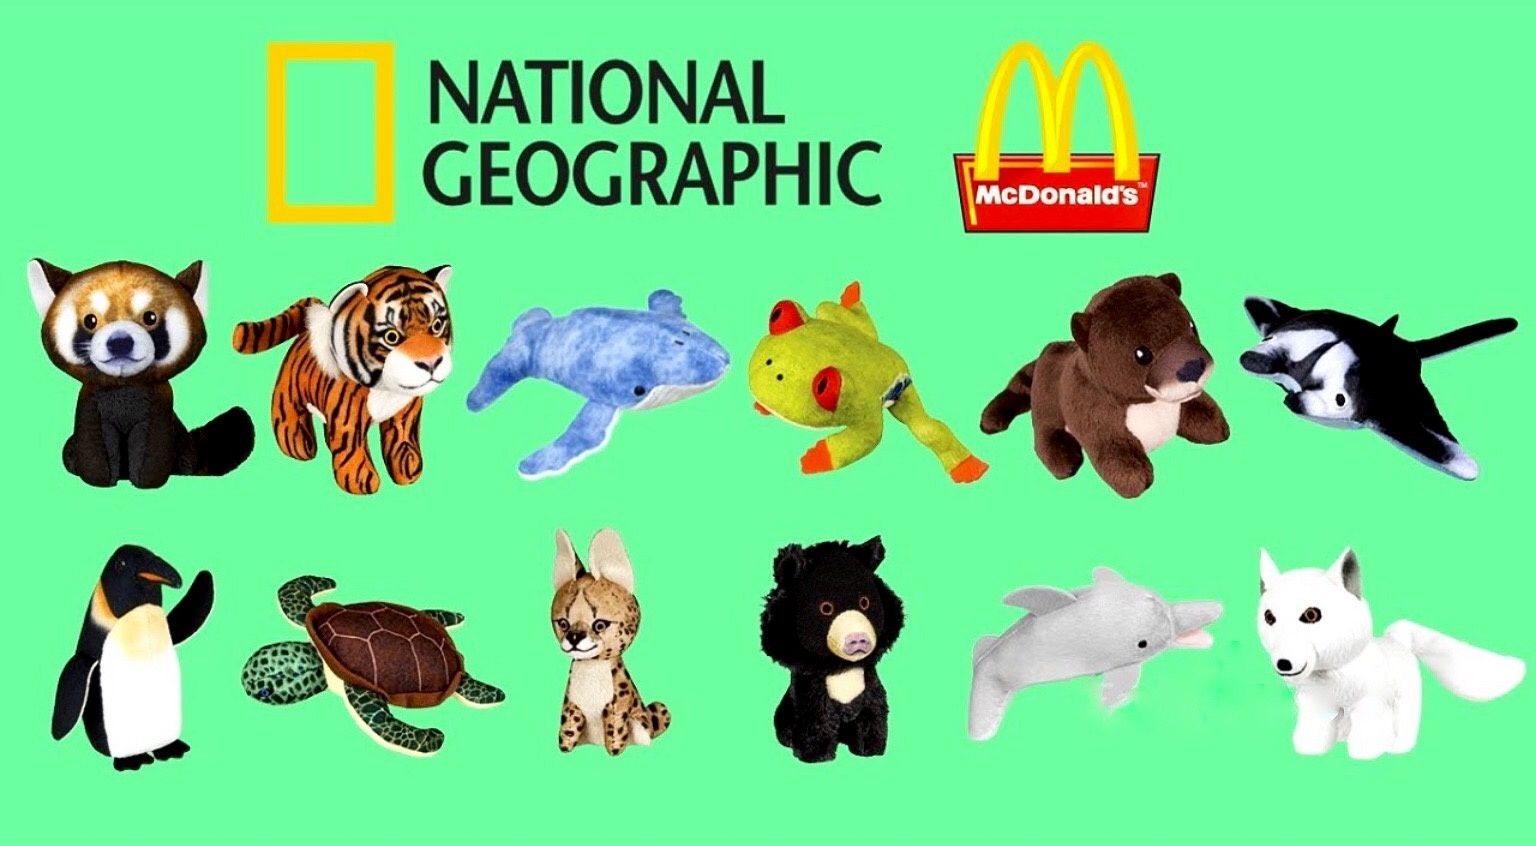 Conjunto 2 Peluches Animais National Geographic Júnior McDonald's 2018